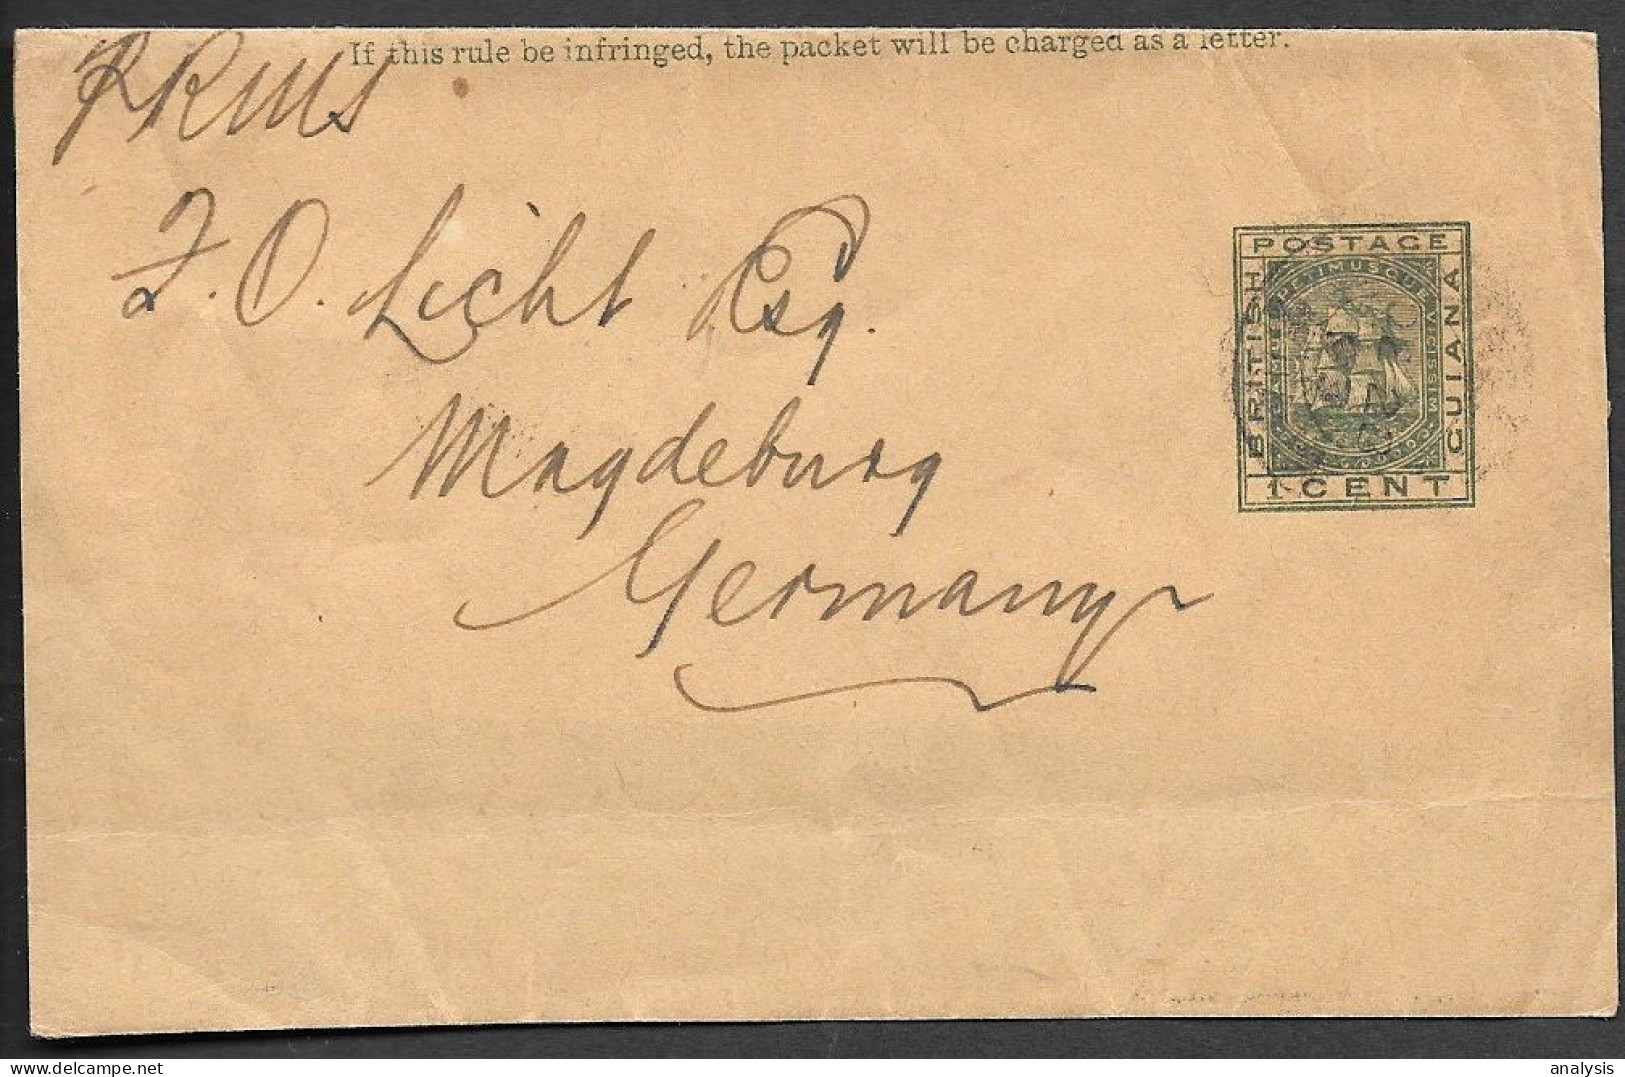 British Guiana 1c Newspaper Wrapper Mailed To Germany 1903 - Guyane Britannique (...-1966)